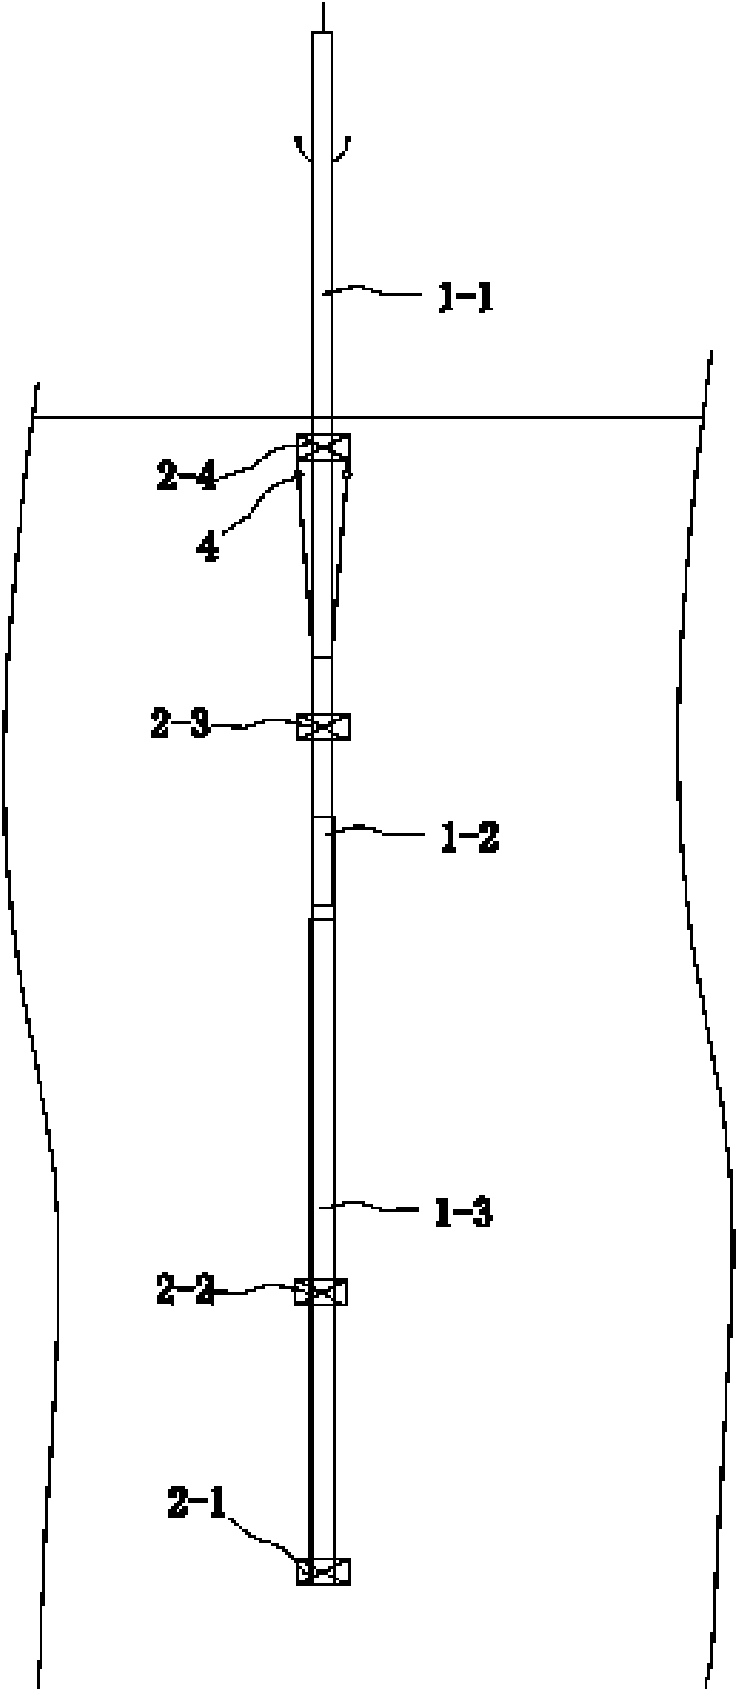 Installing method of roof mast